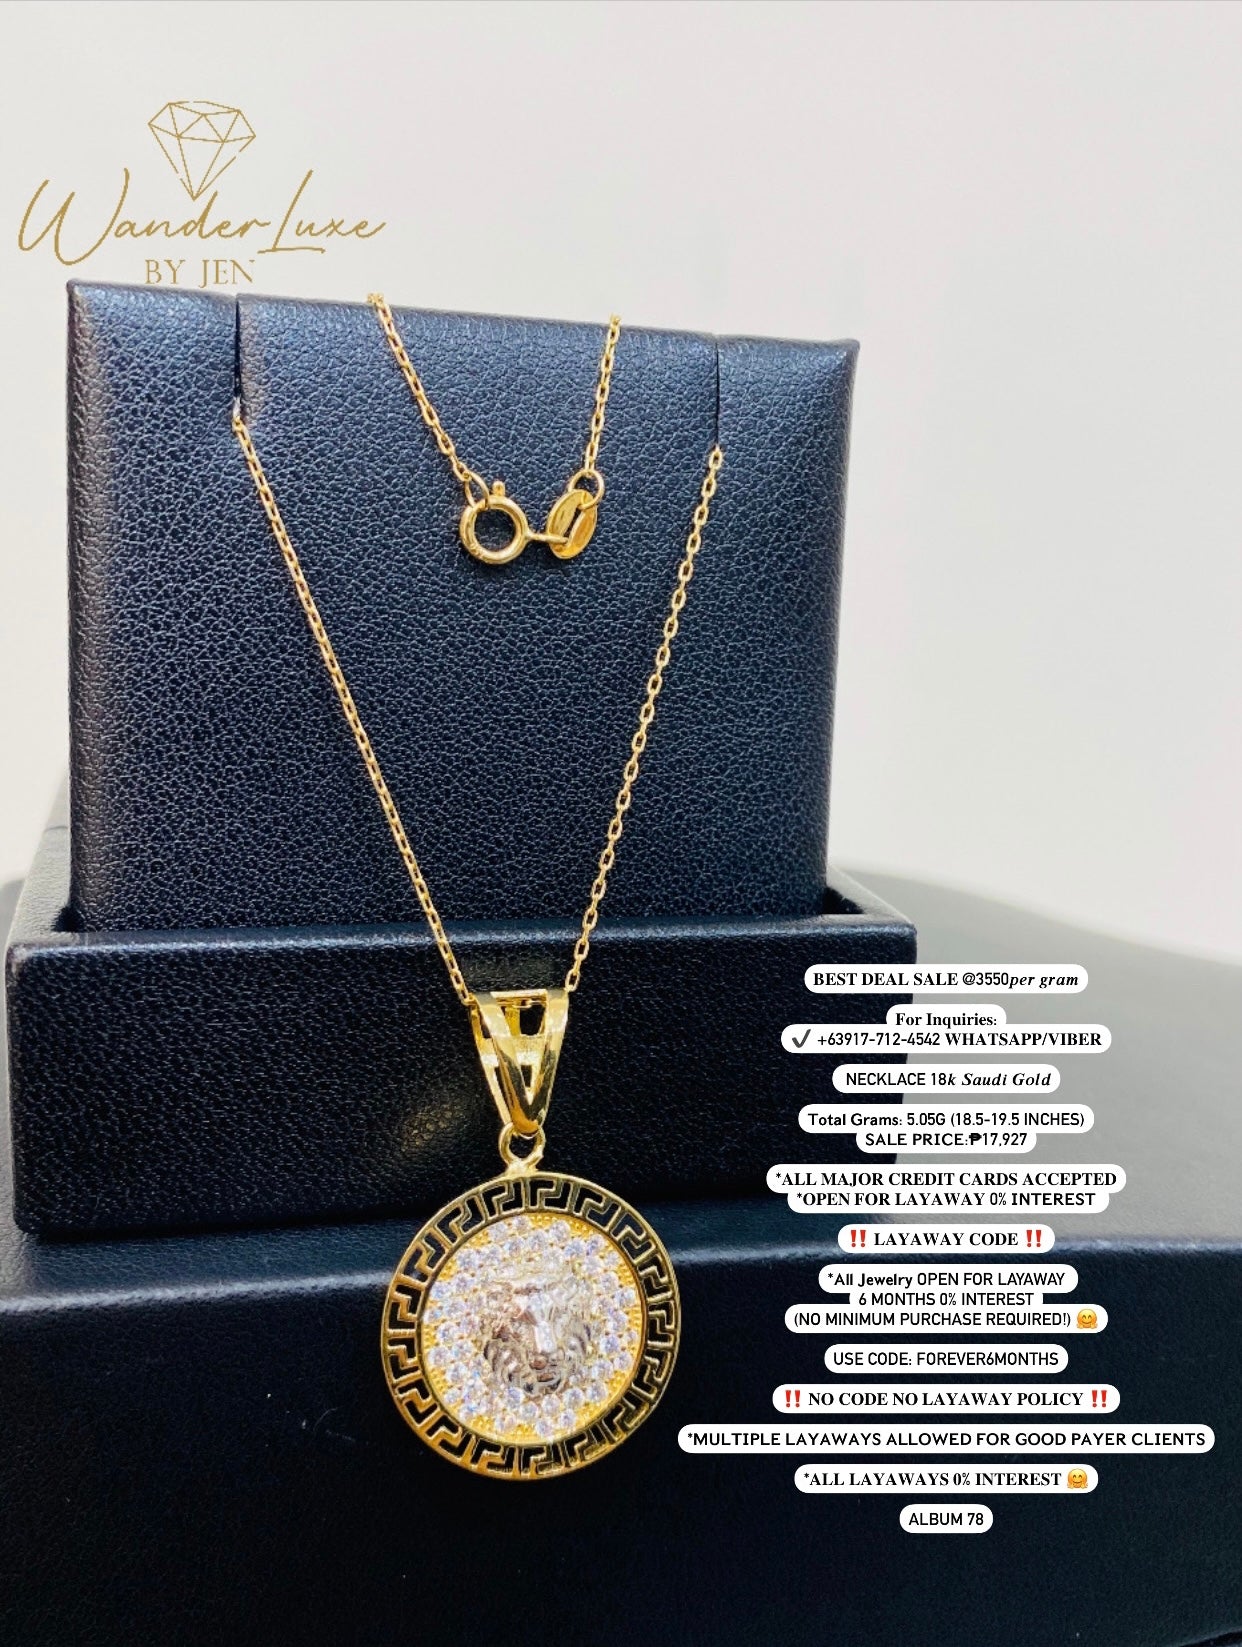 18K Saudi Gold Necklace with 24K Hong Kong Gold Bar Pendant Pawnable |  Lazada PH